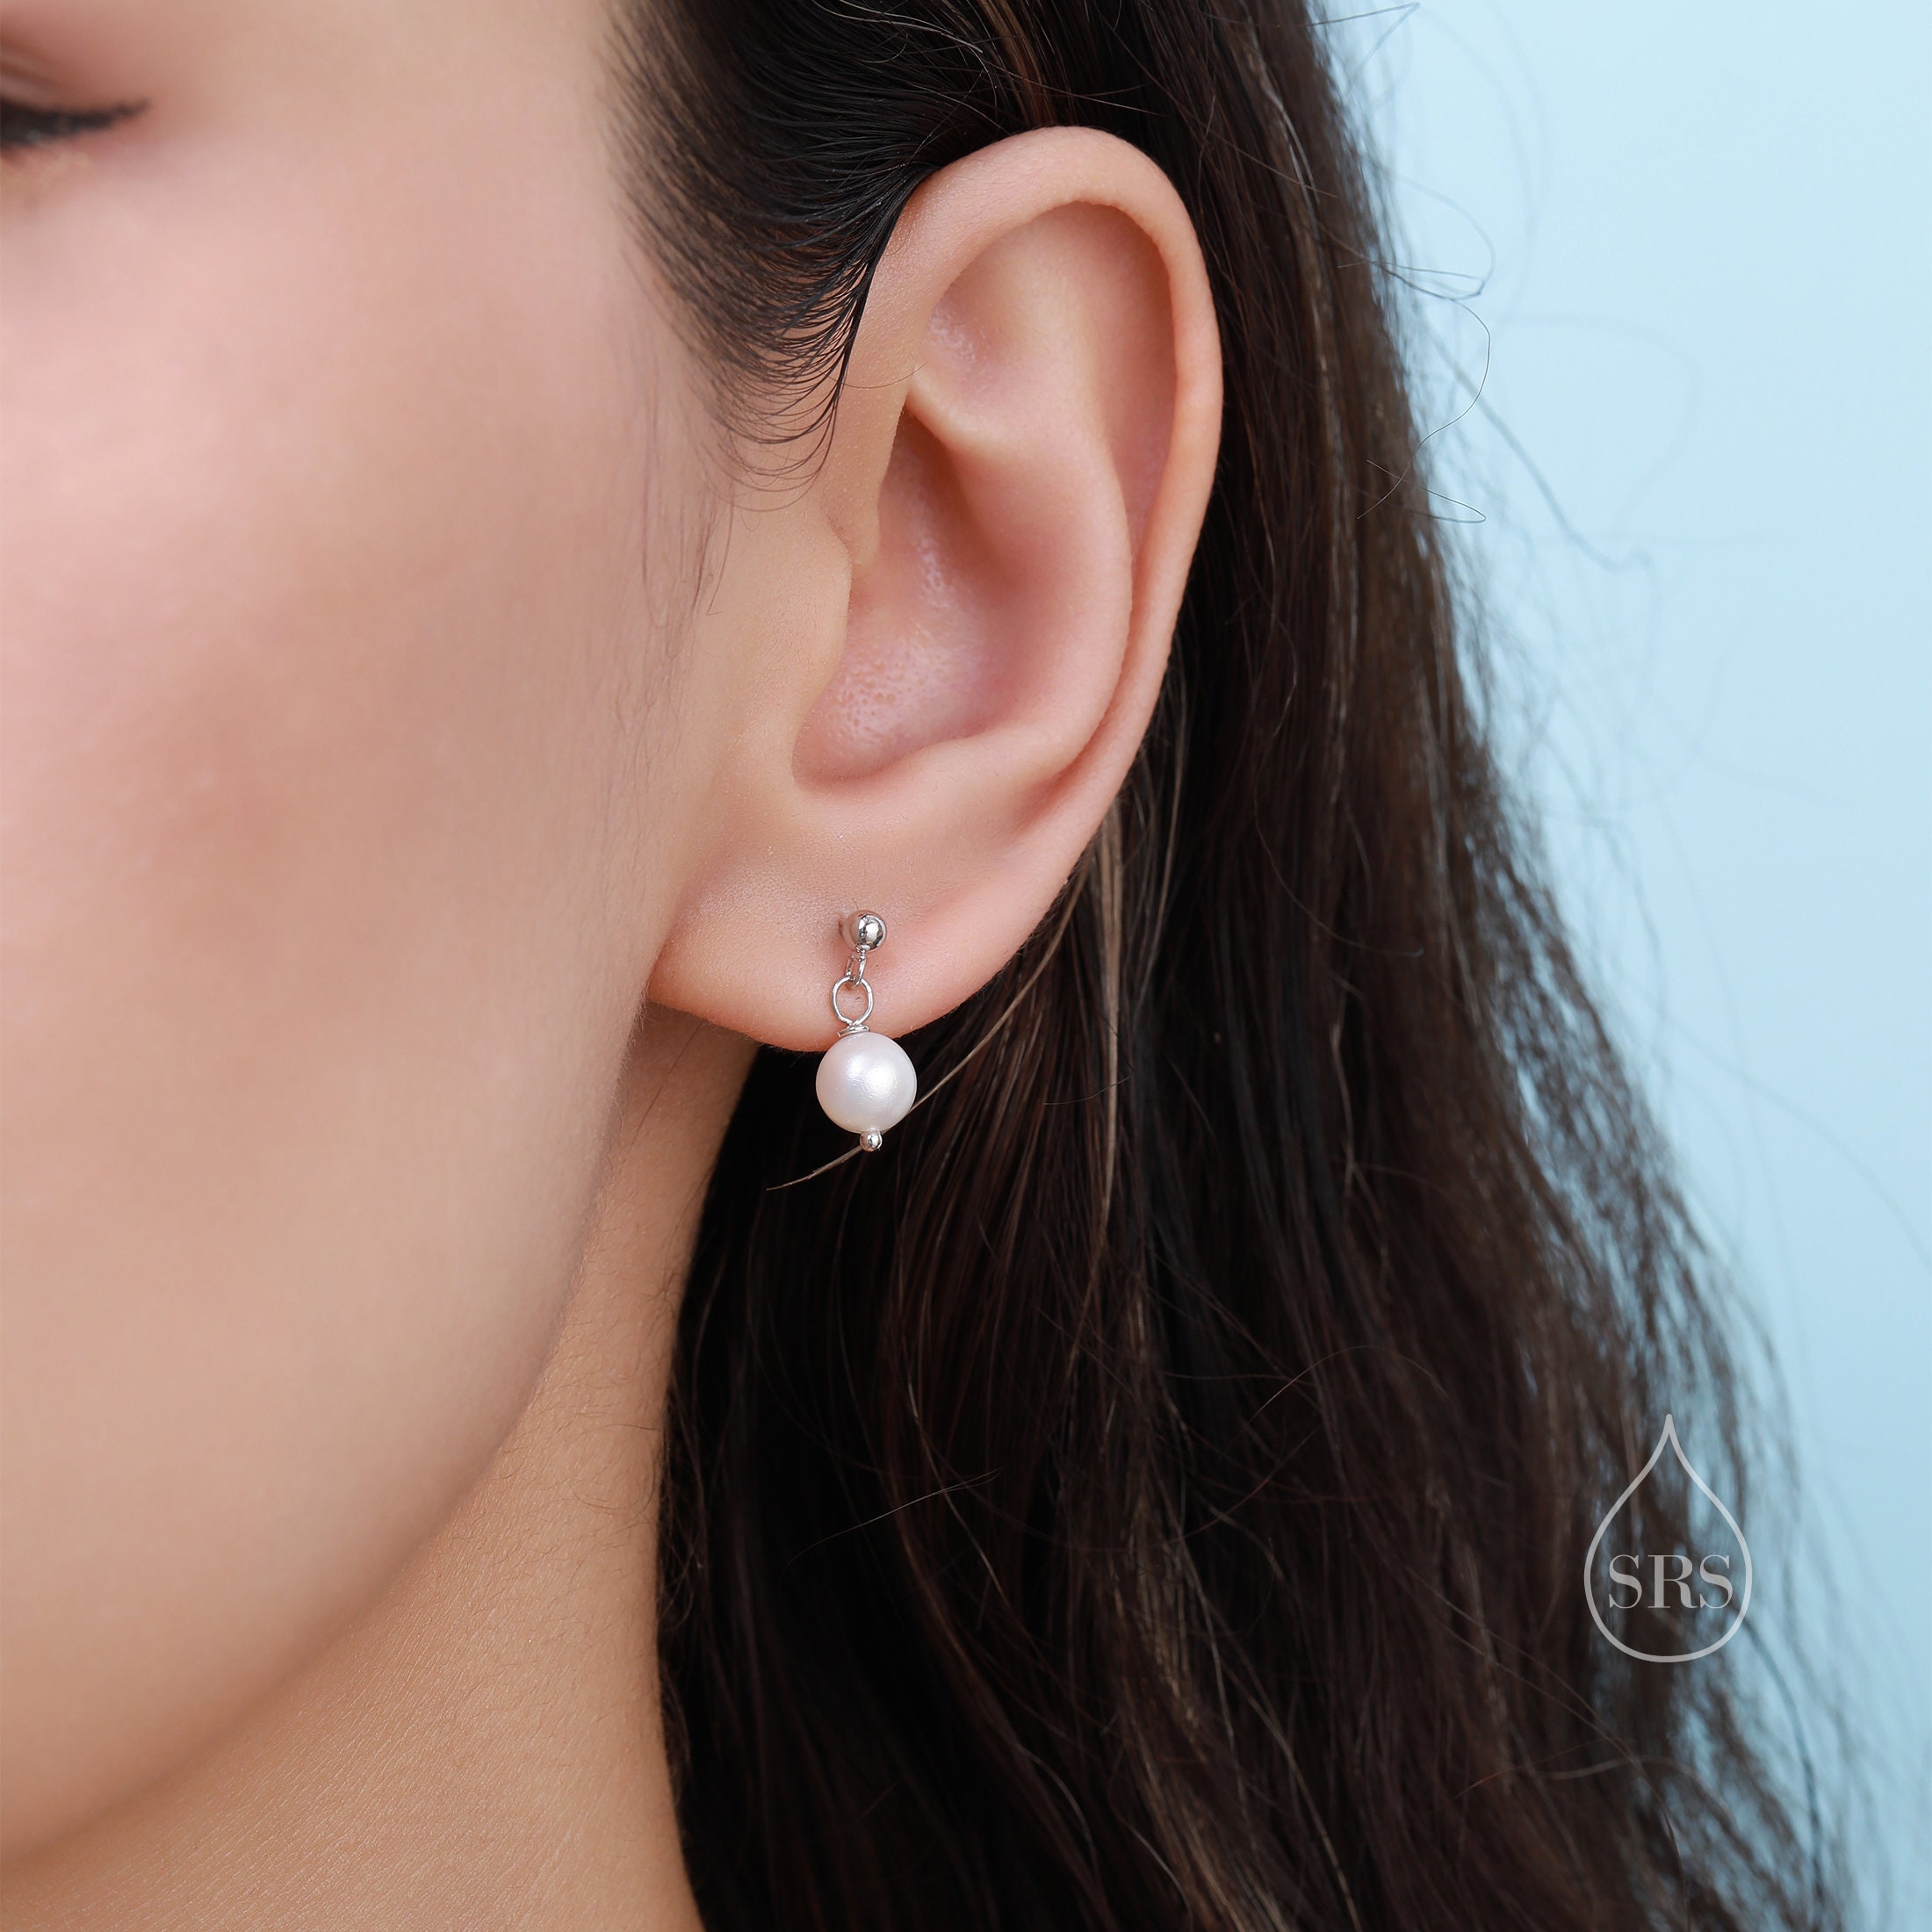 chanel inspired fashion earrings